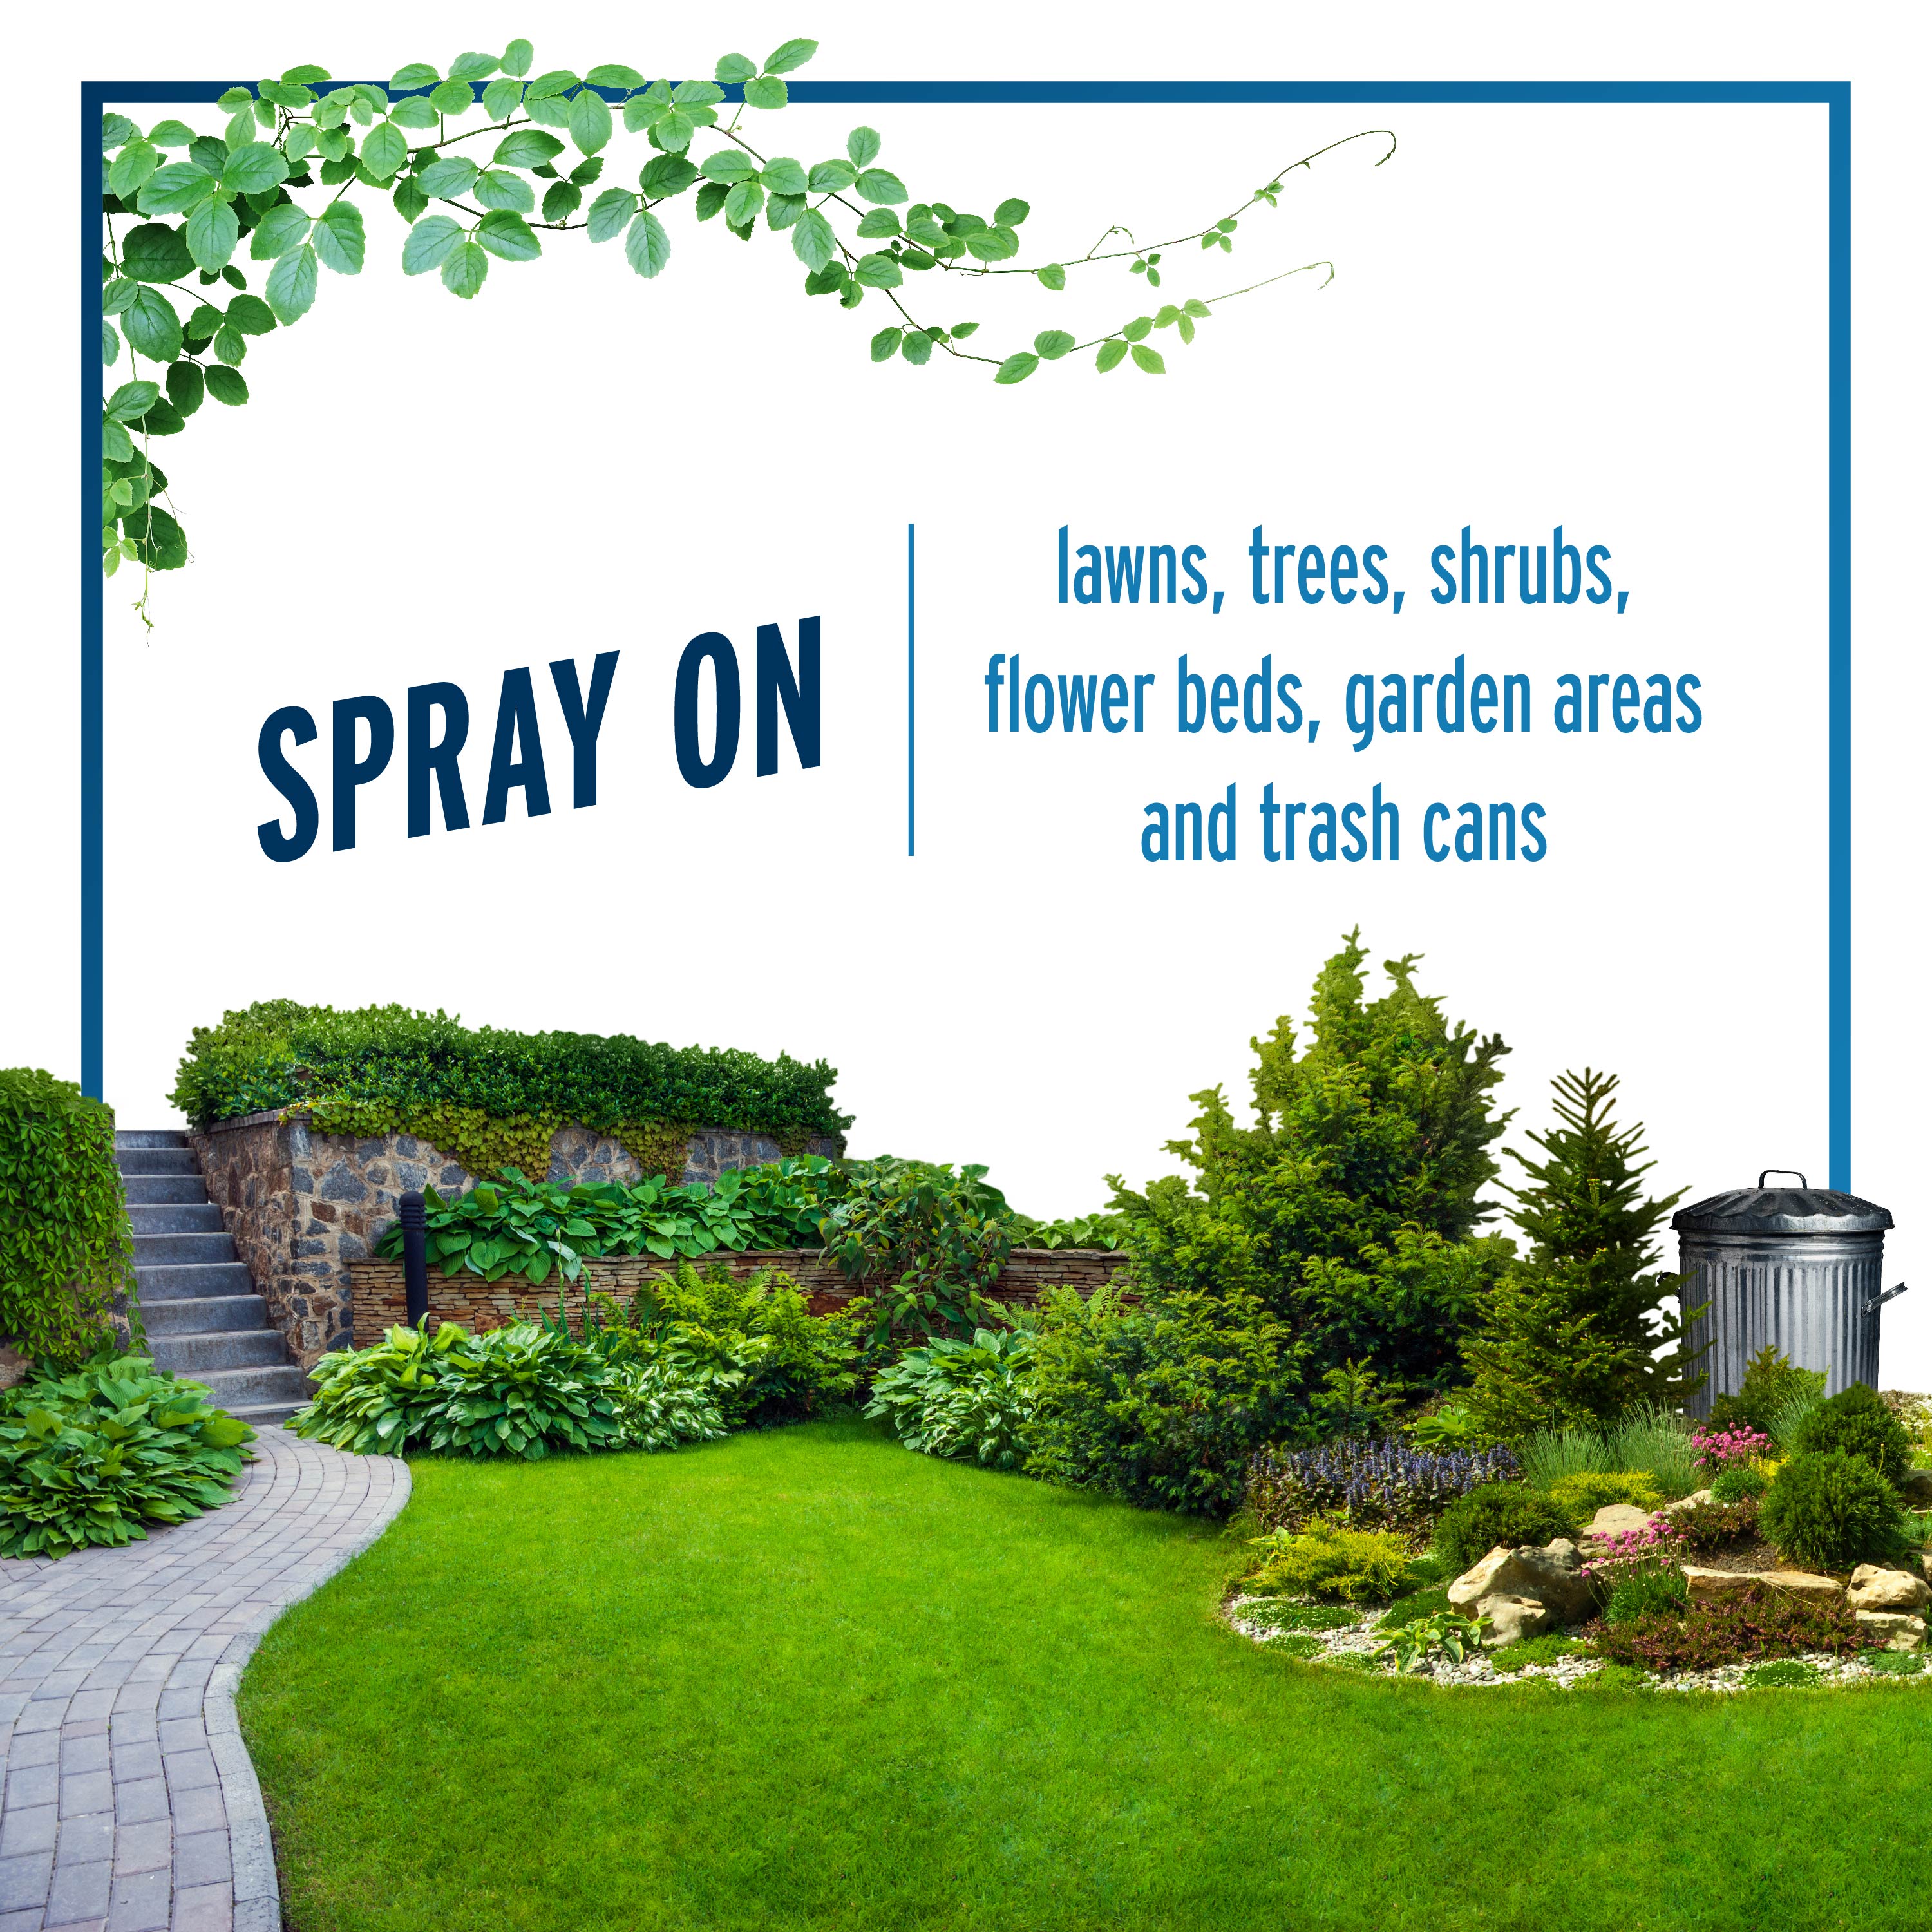 spray on lawns, trees, shrubs, flower beds, etc